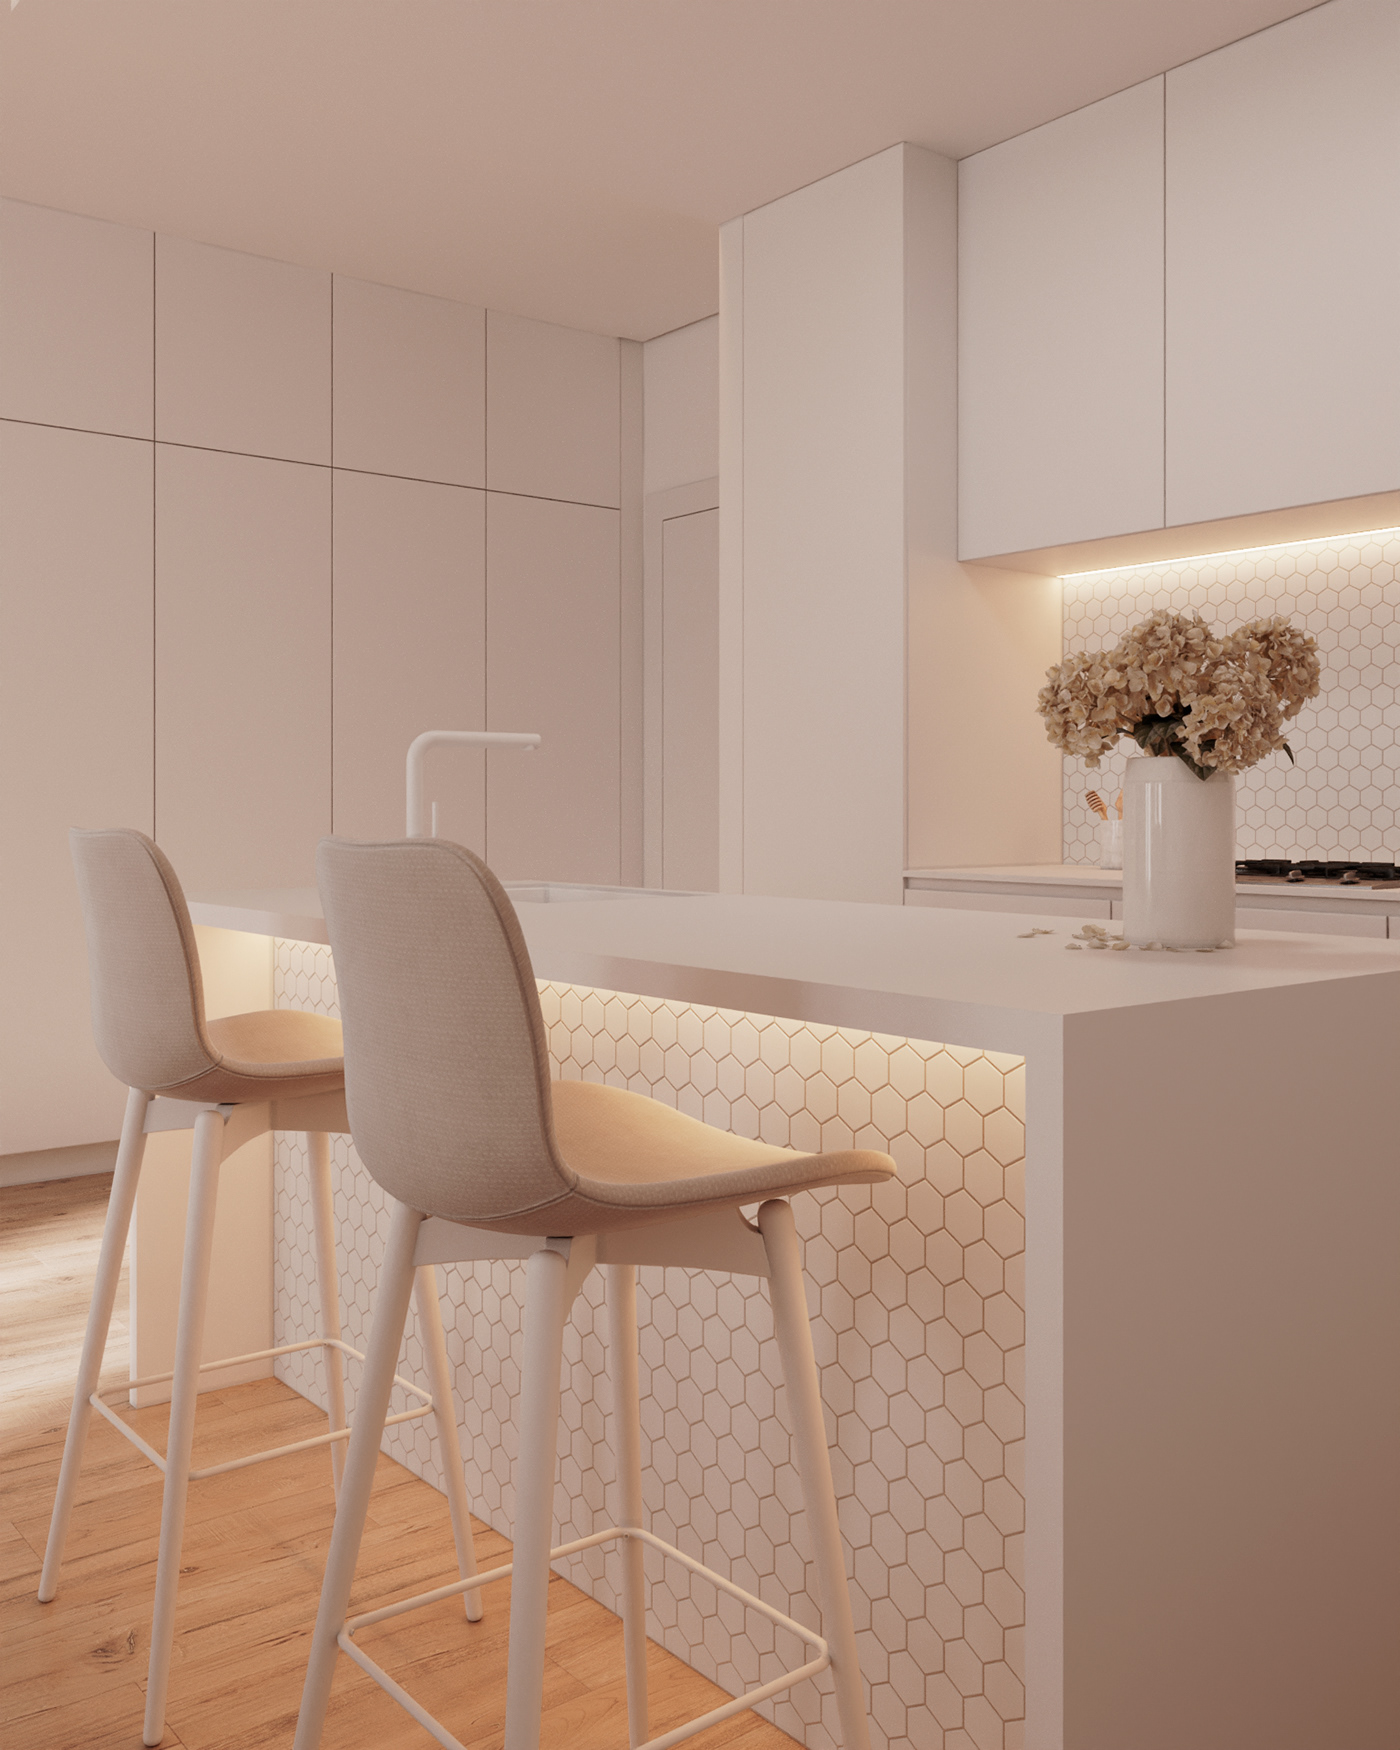 3D 3ds max apartment archviz corona corona render  flat interior design  inmobiliaria real estate